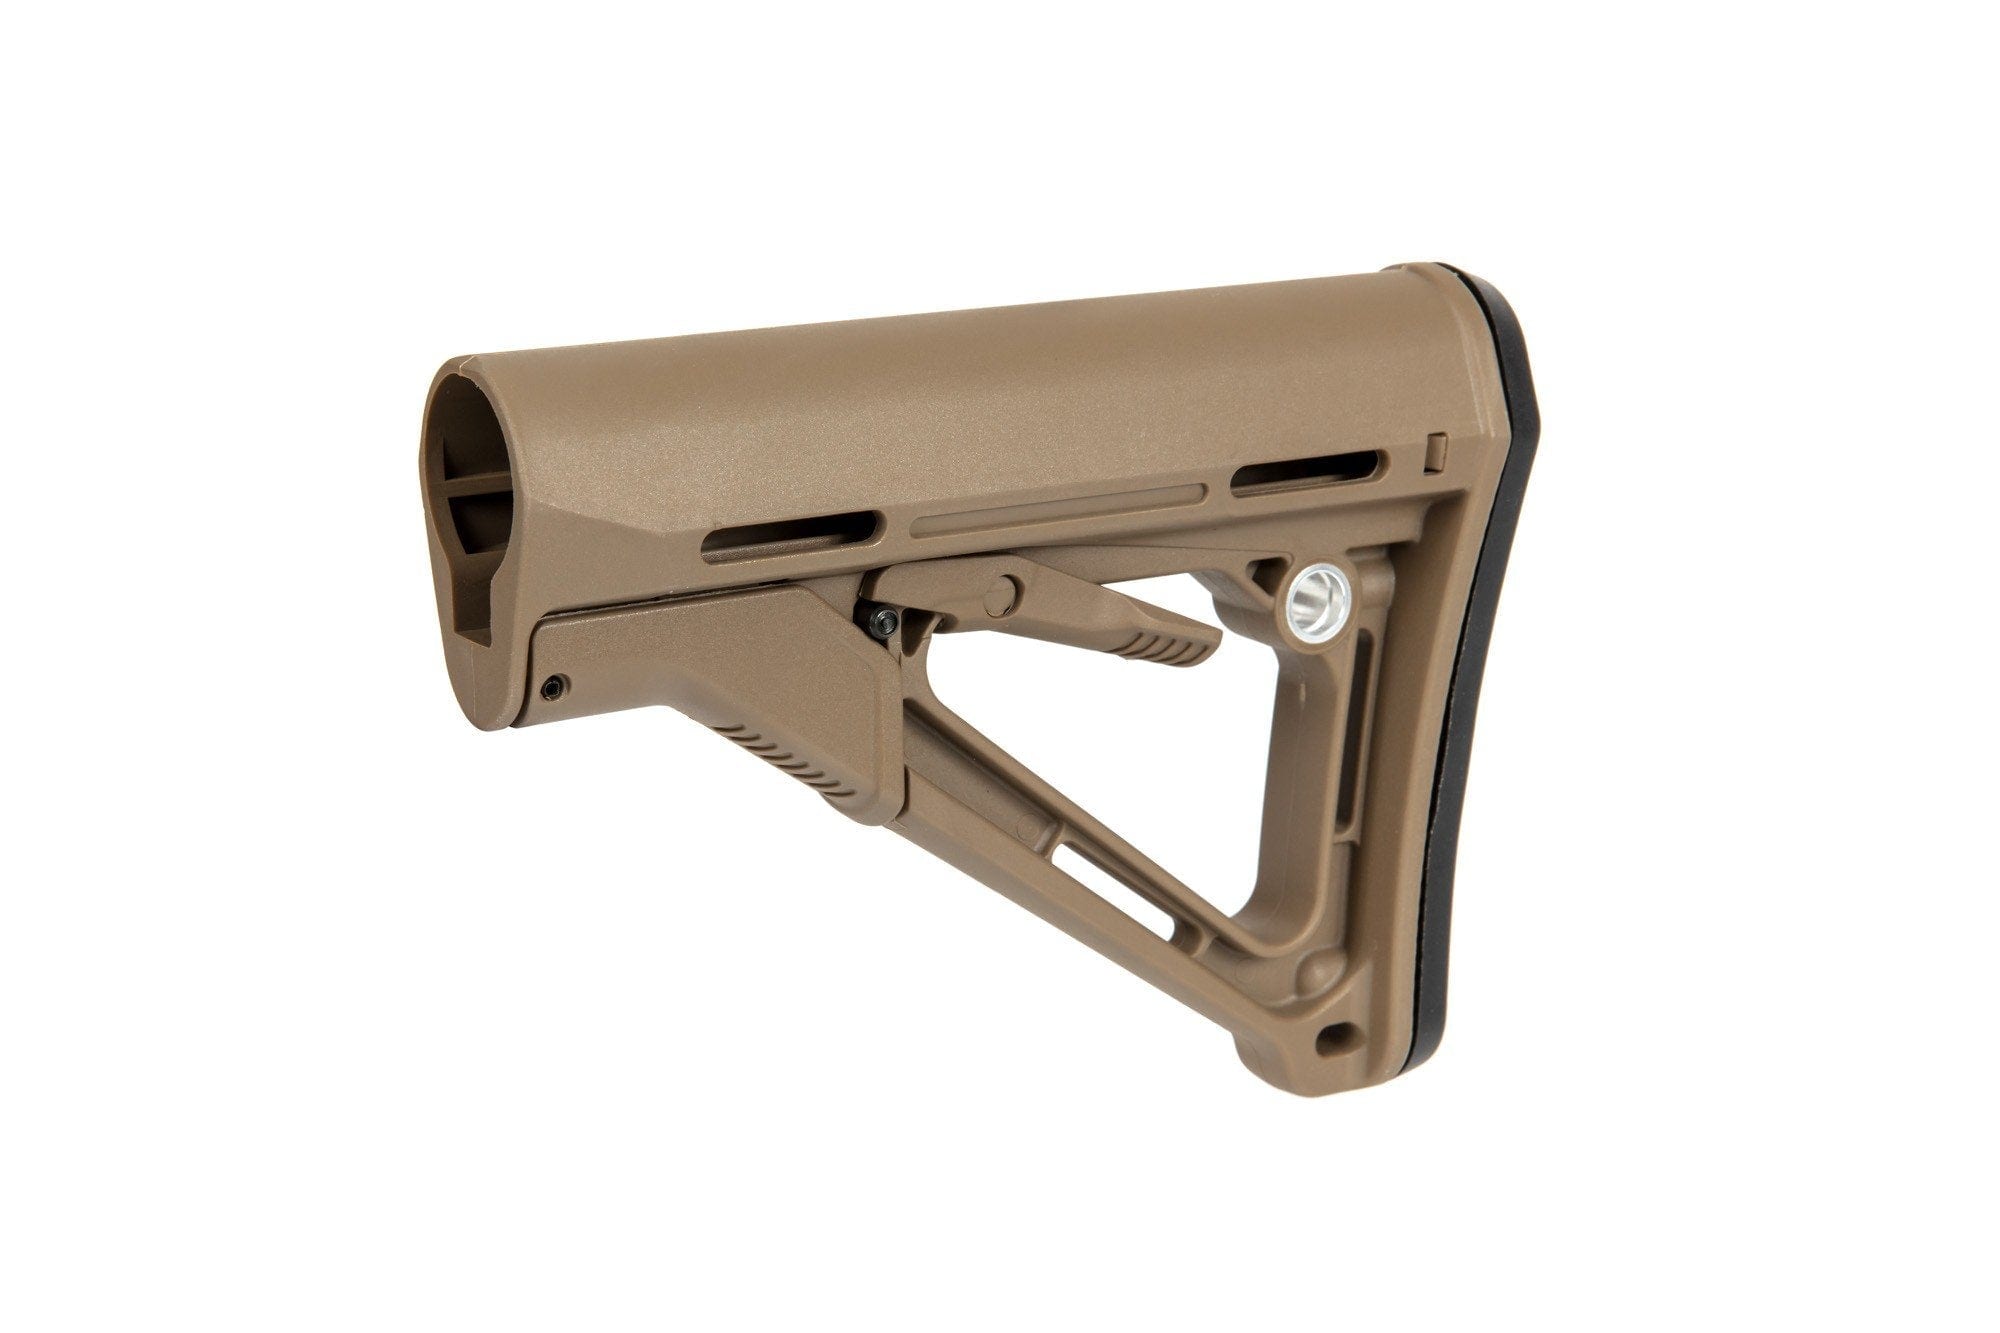 Adjustable Stock for M4/M16 Replicas - Tan